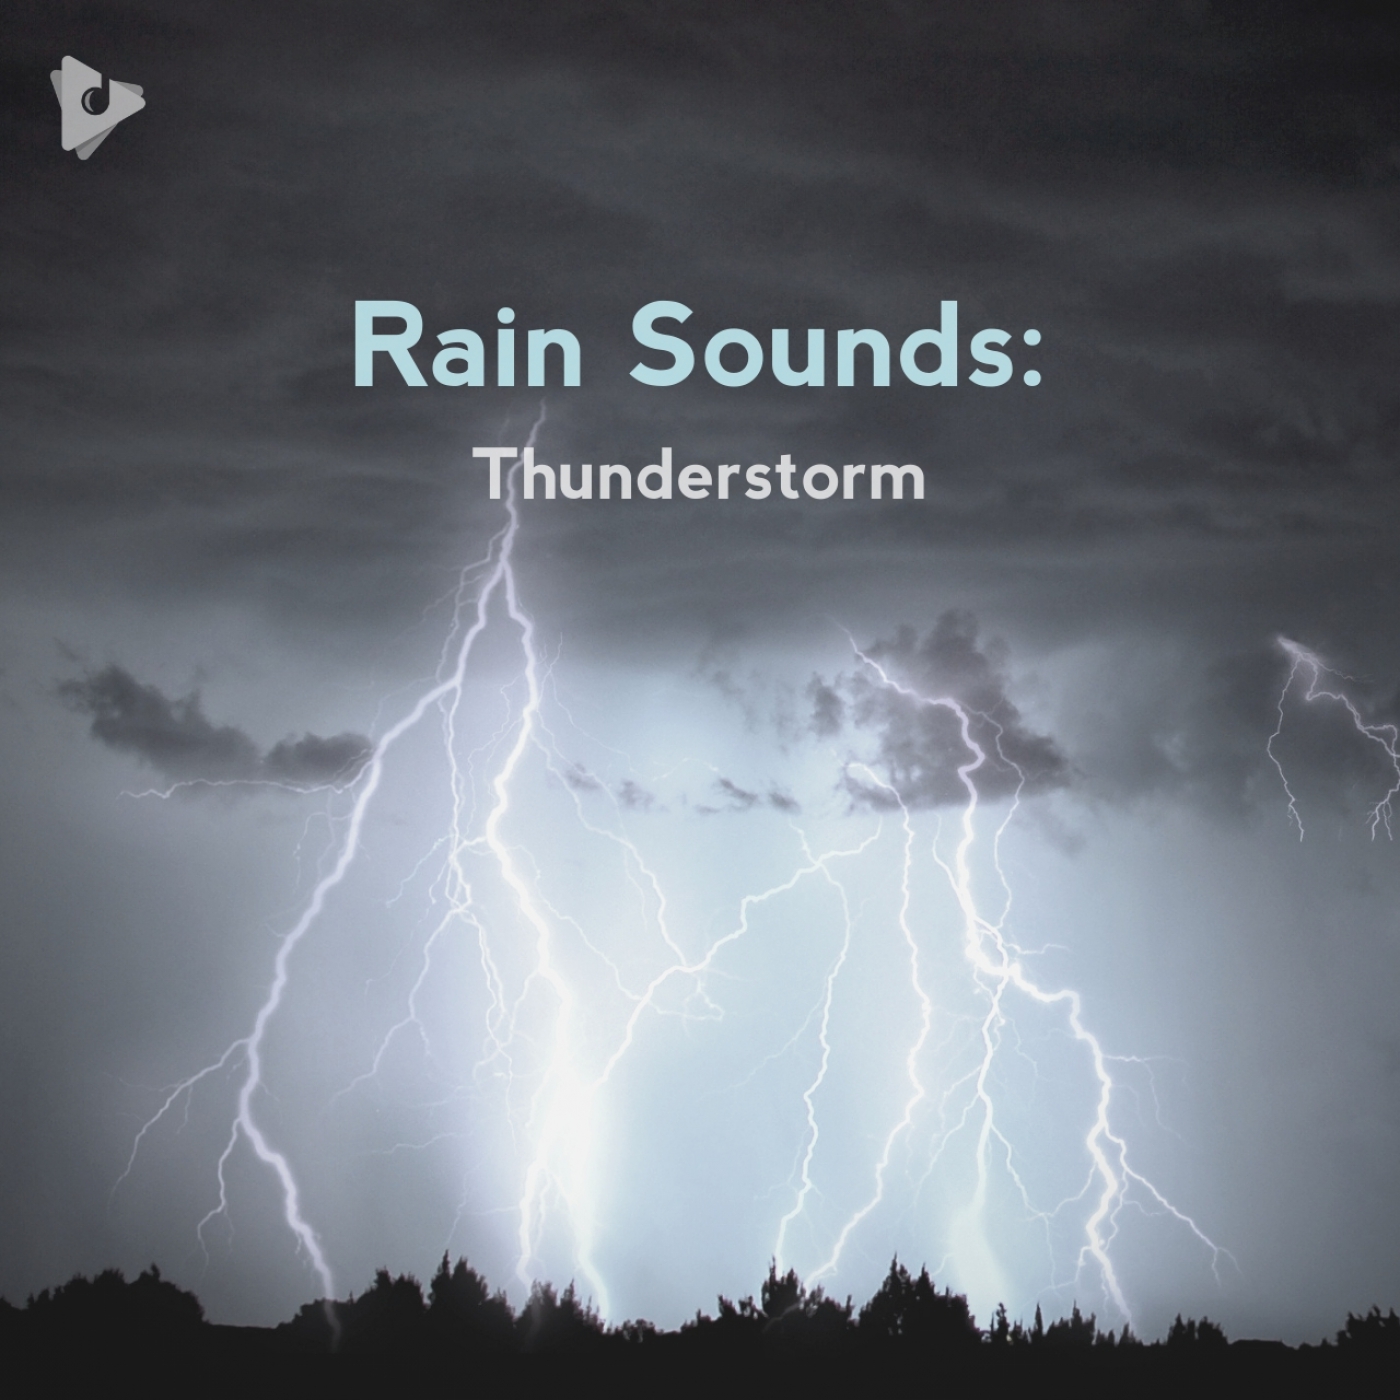 thunderstorm sounds